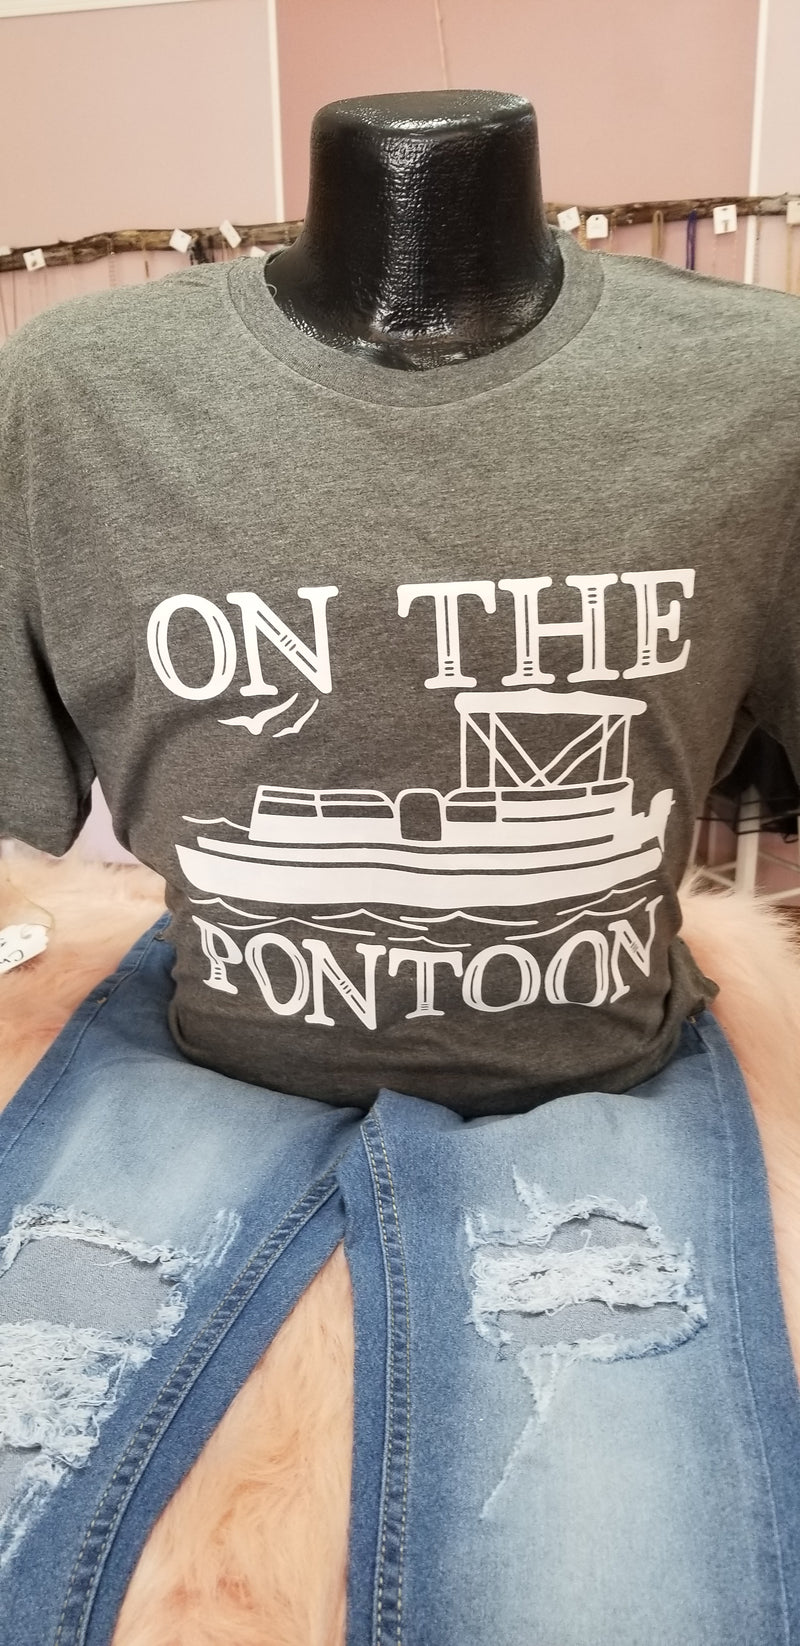 On The Pontoon T-shirt